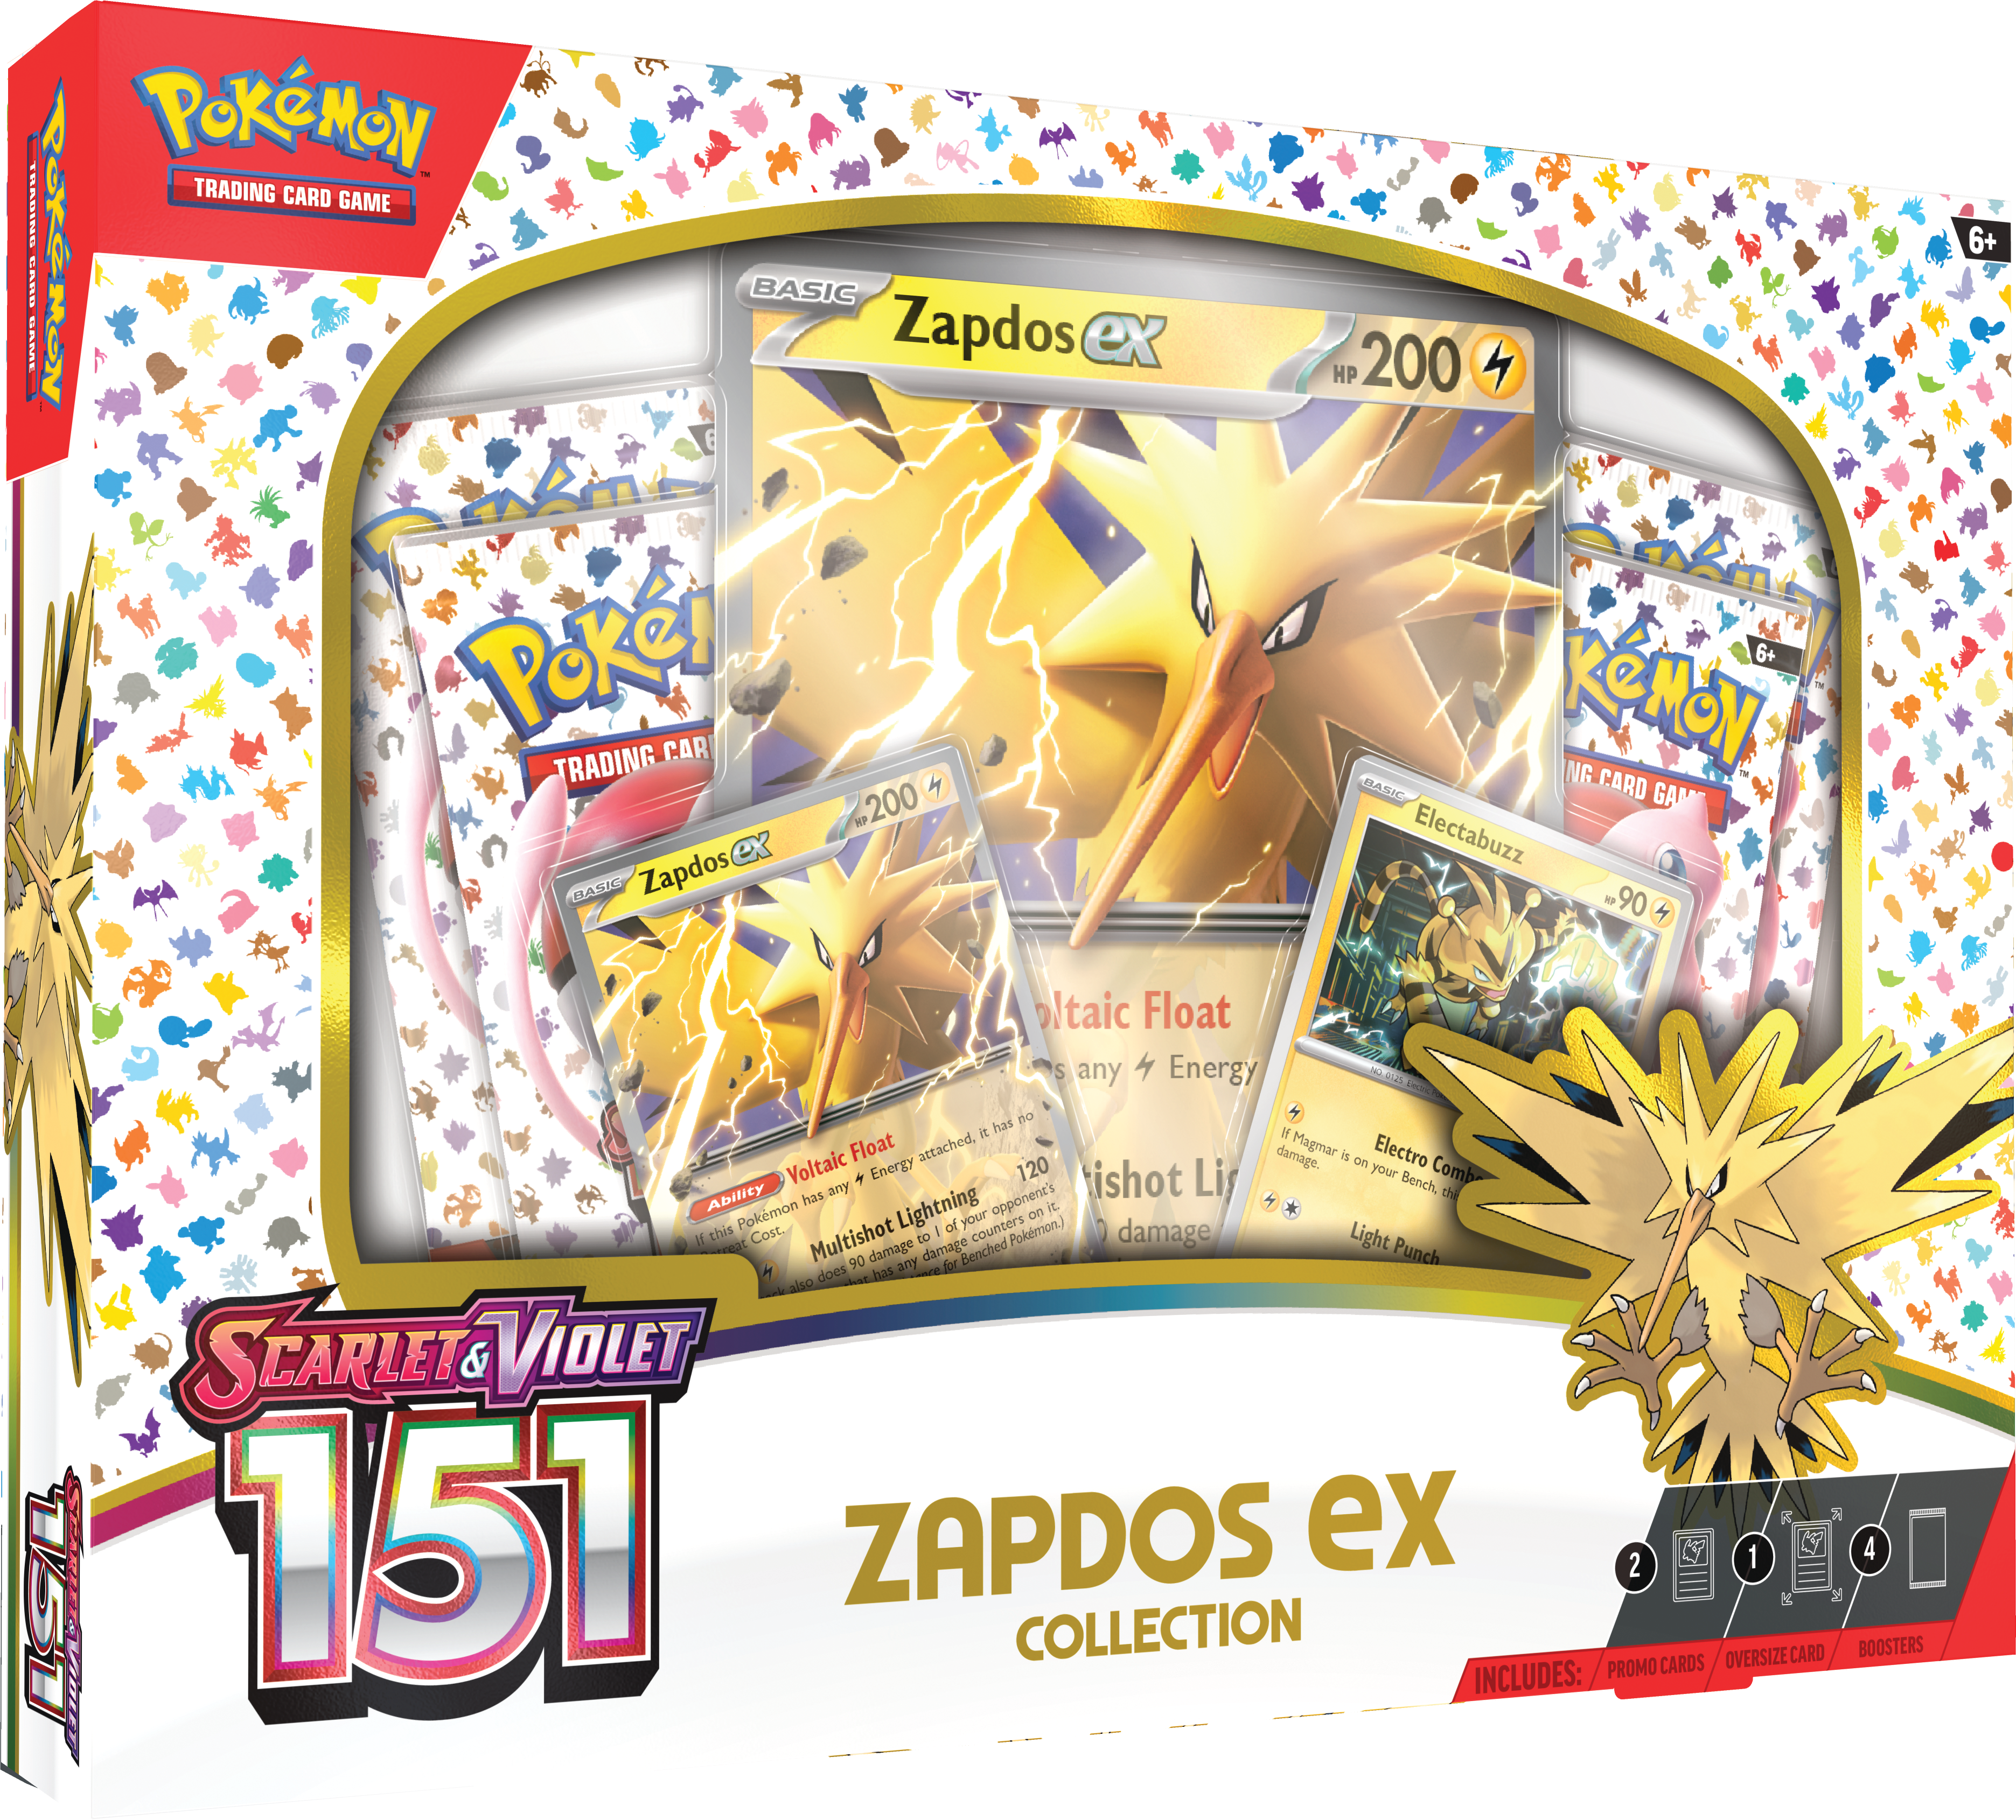 Pokemon Scarlet & Violet 151: Zapdos Ex Collection | HFX Games